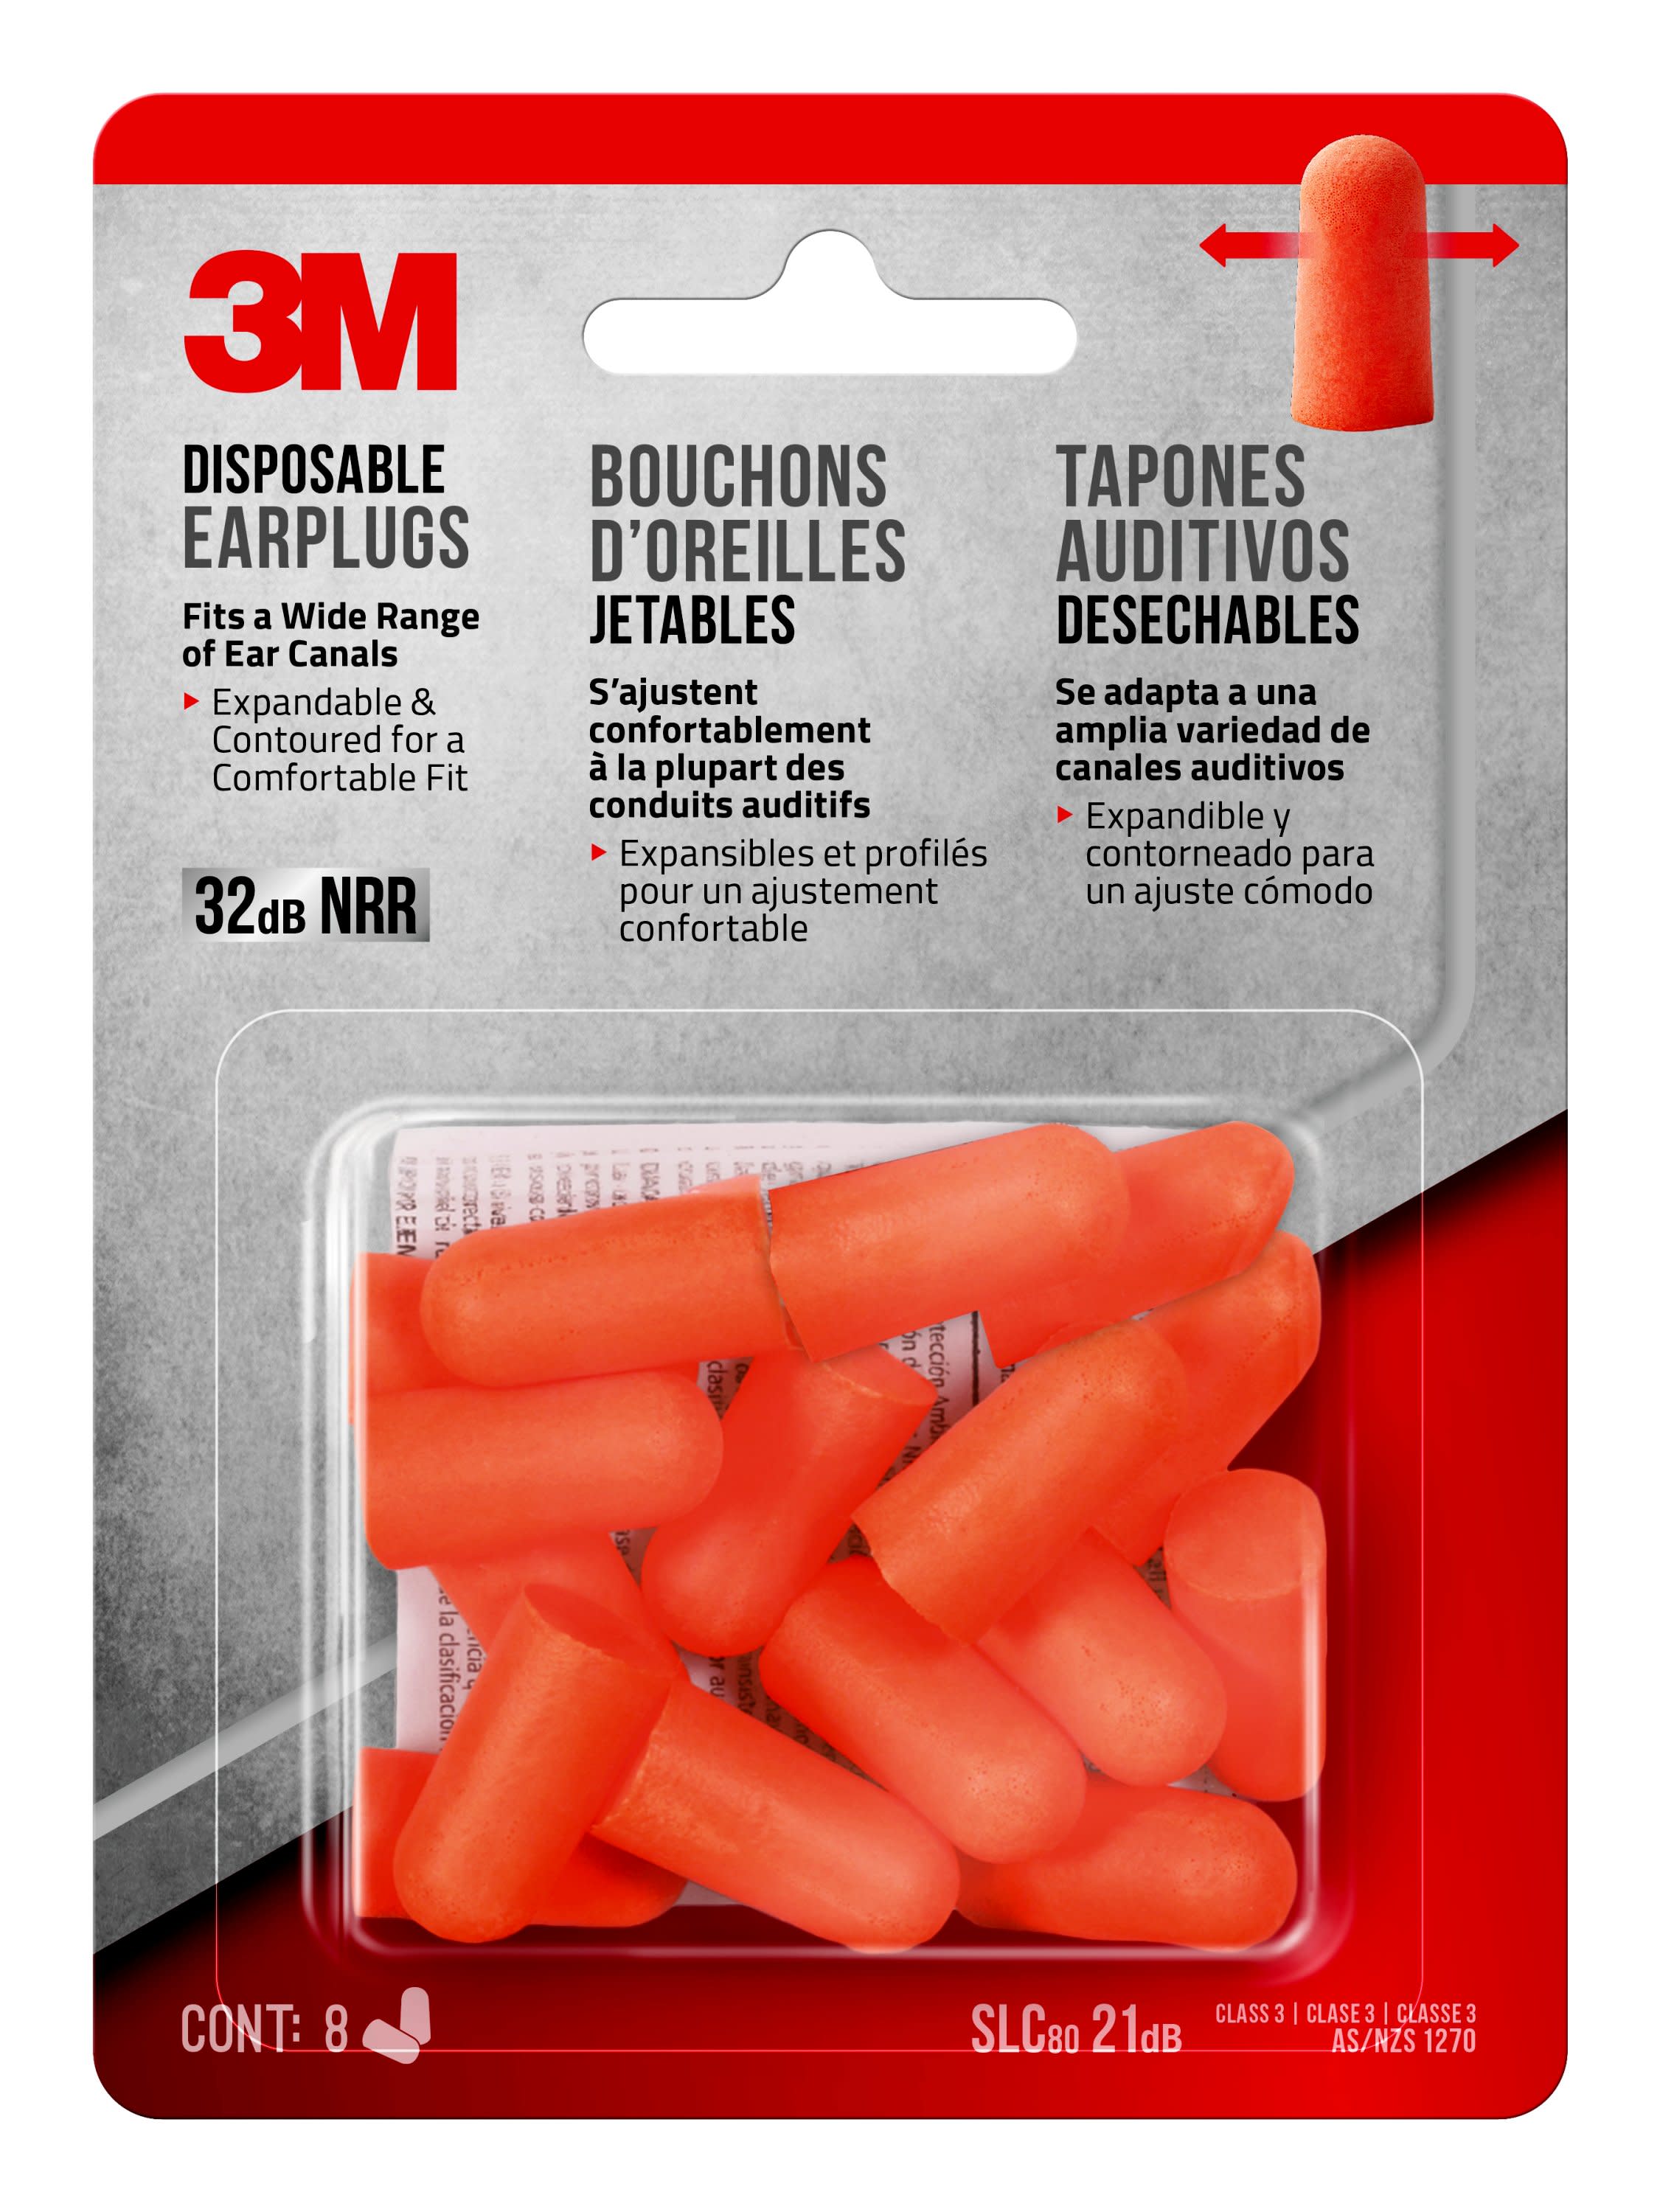 3M Soft Foam Disposable Ear Plugs, Orange, 92077H8-DC, 32 Db, 8 Pair - image 1 of 5